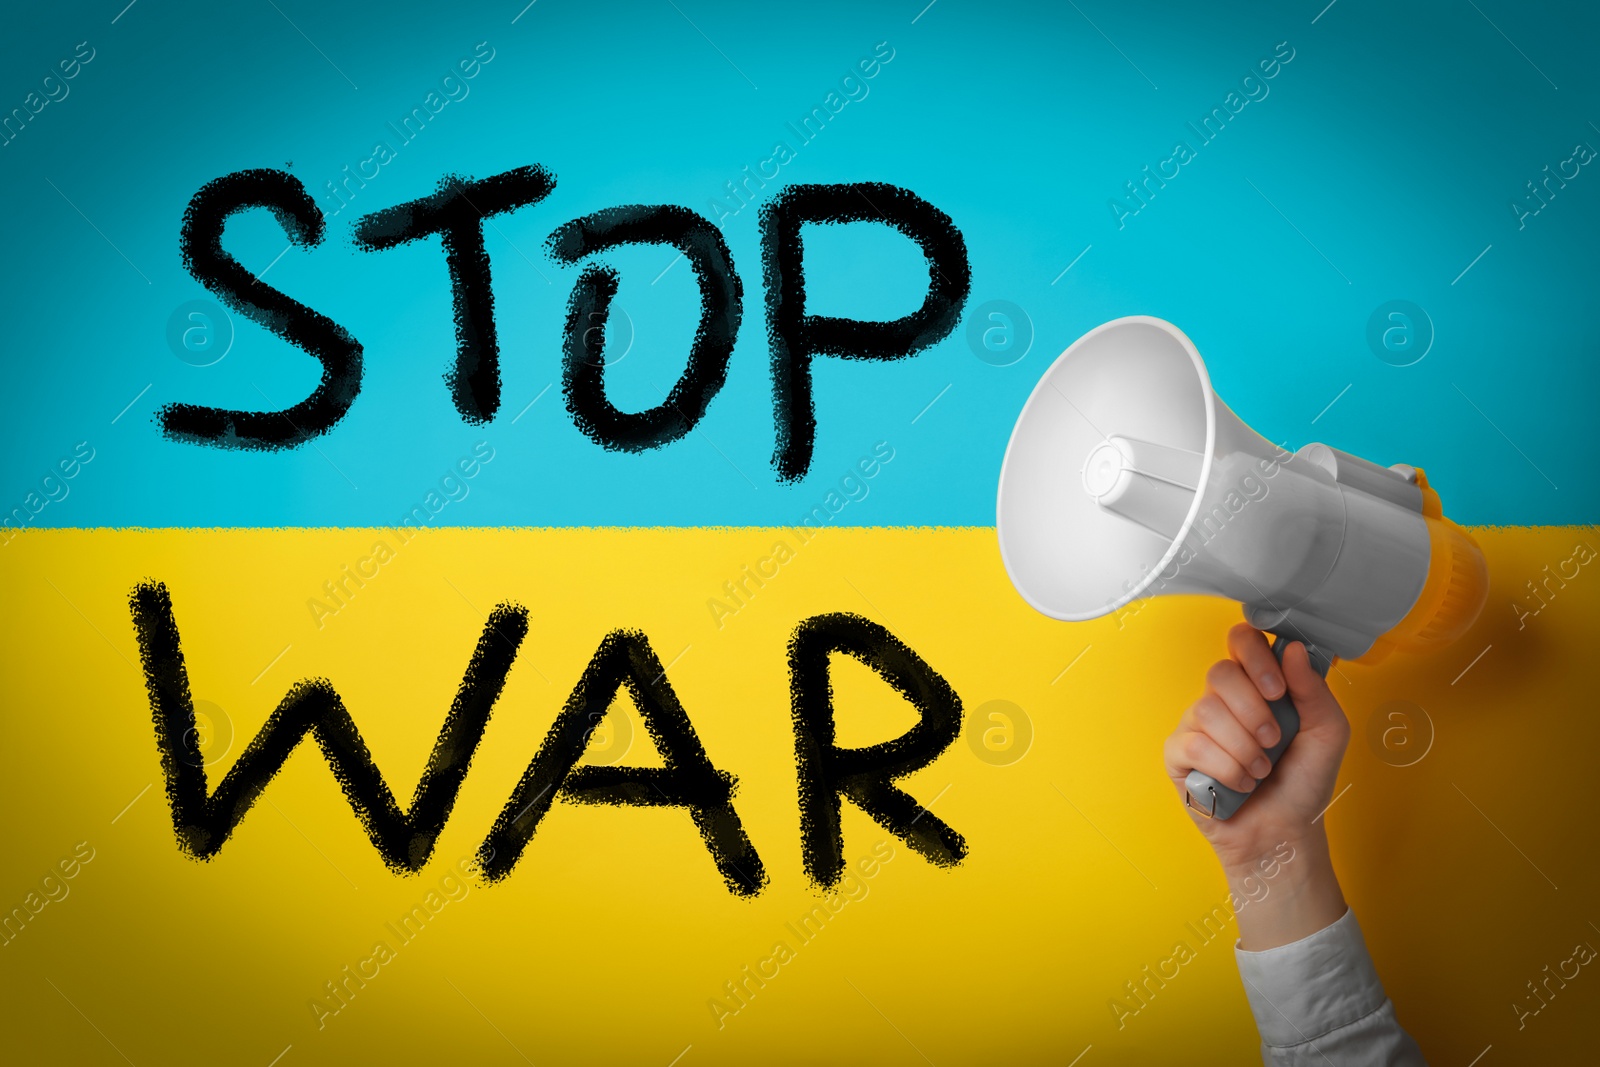 Image of Stop war in Ukraine. Woman with megaphone against Ukrainian national flag